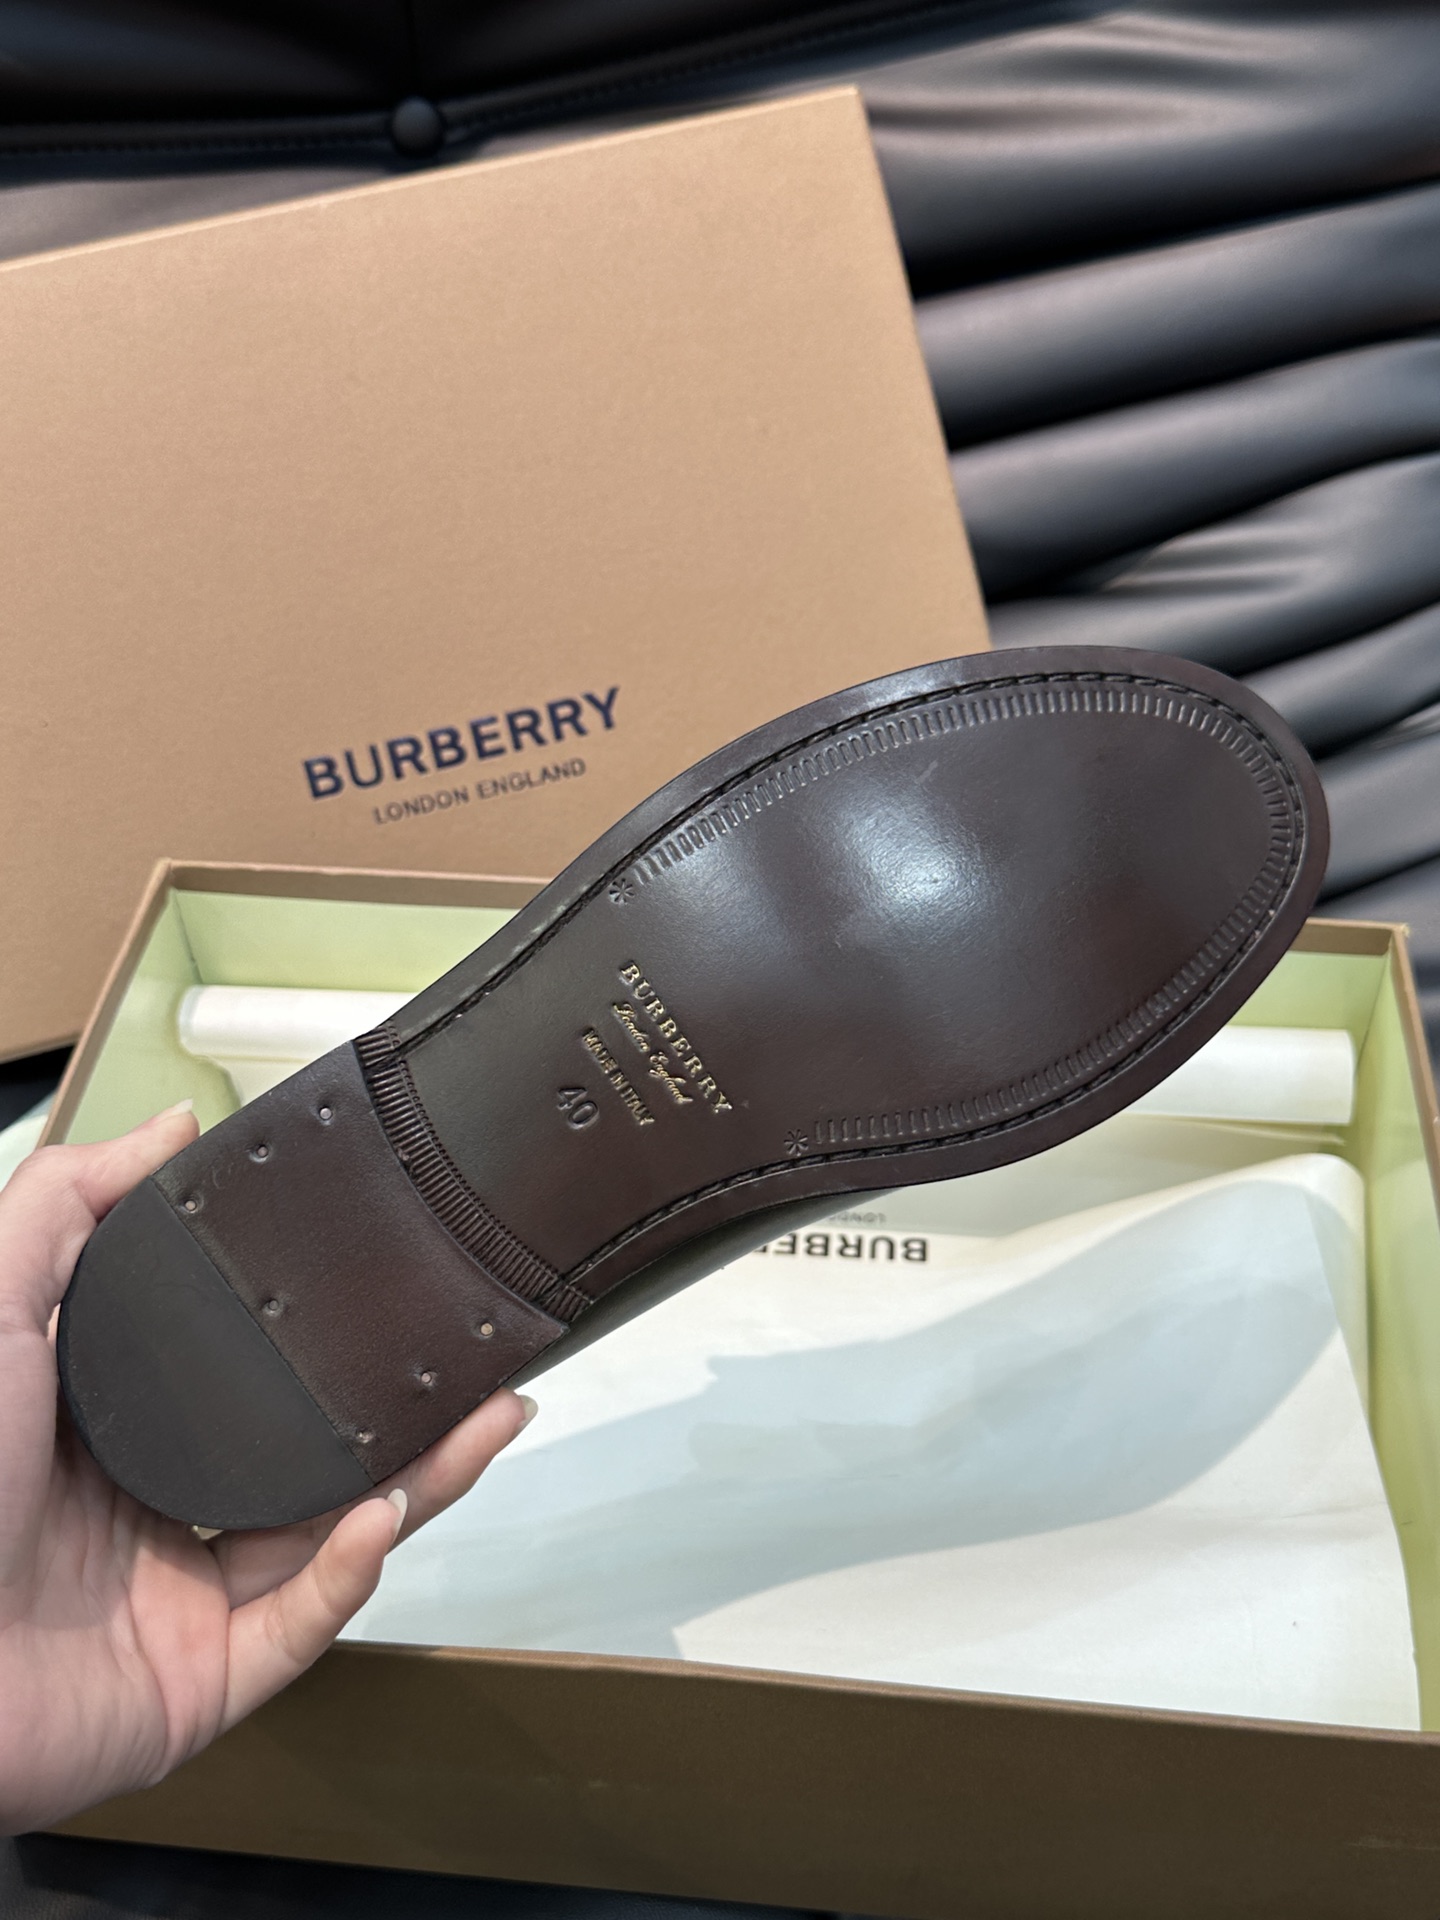 Burberr*男士真皮大底正装休闲皮鞋高端大气英伦气质单品小牛皮透气内里进口真皮大底顶级品质！Size